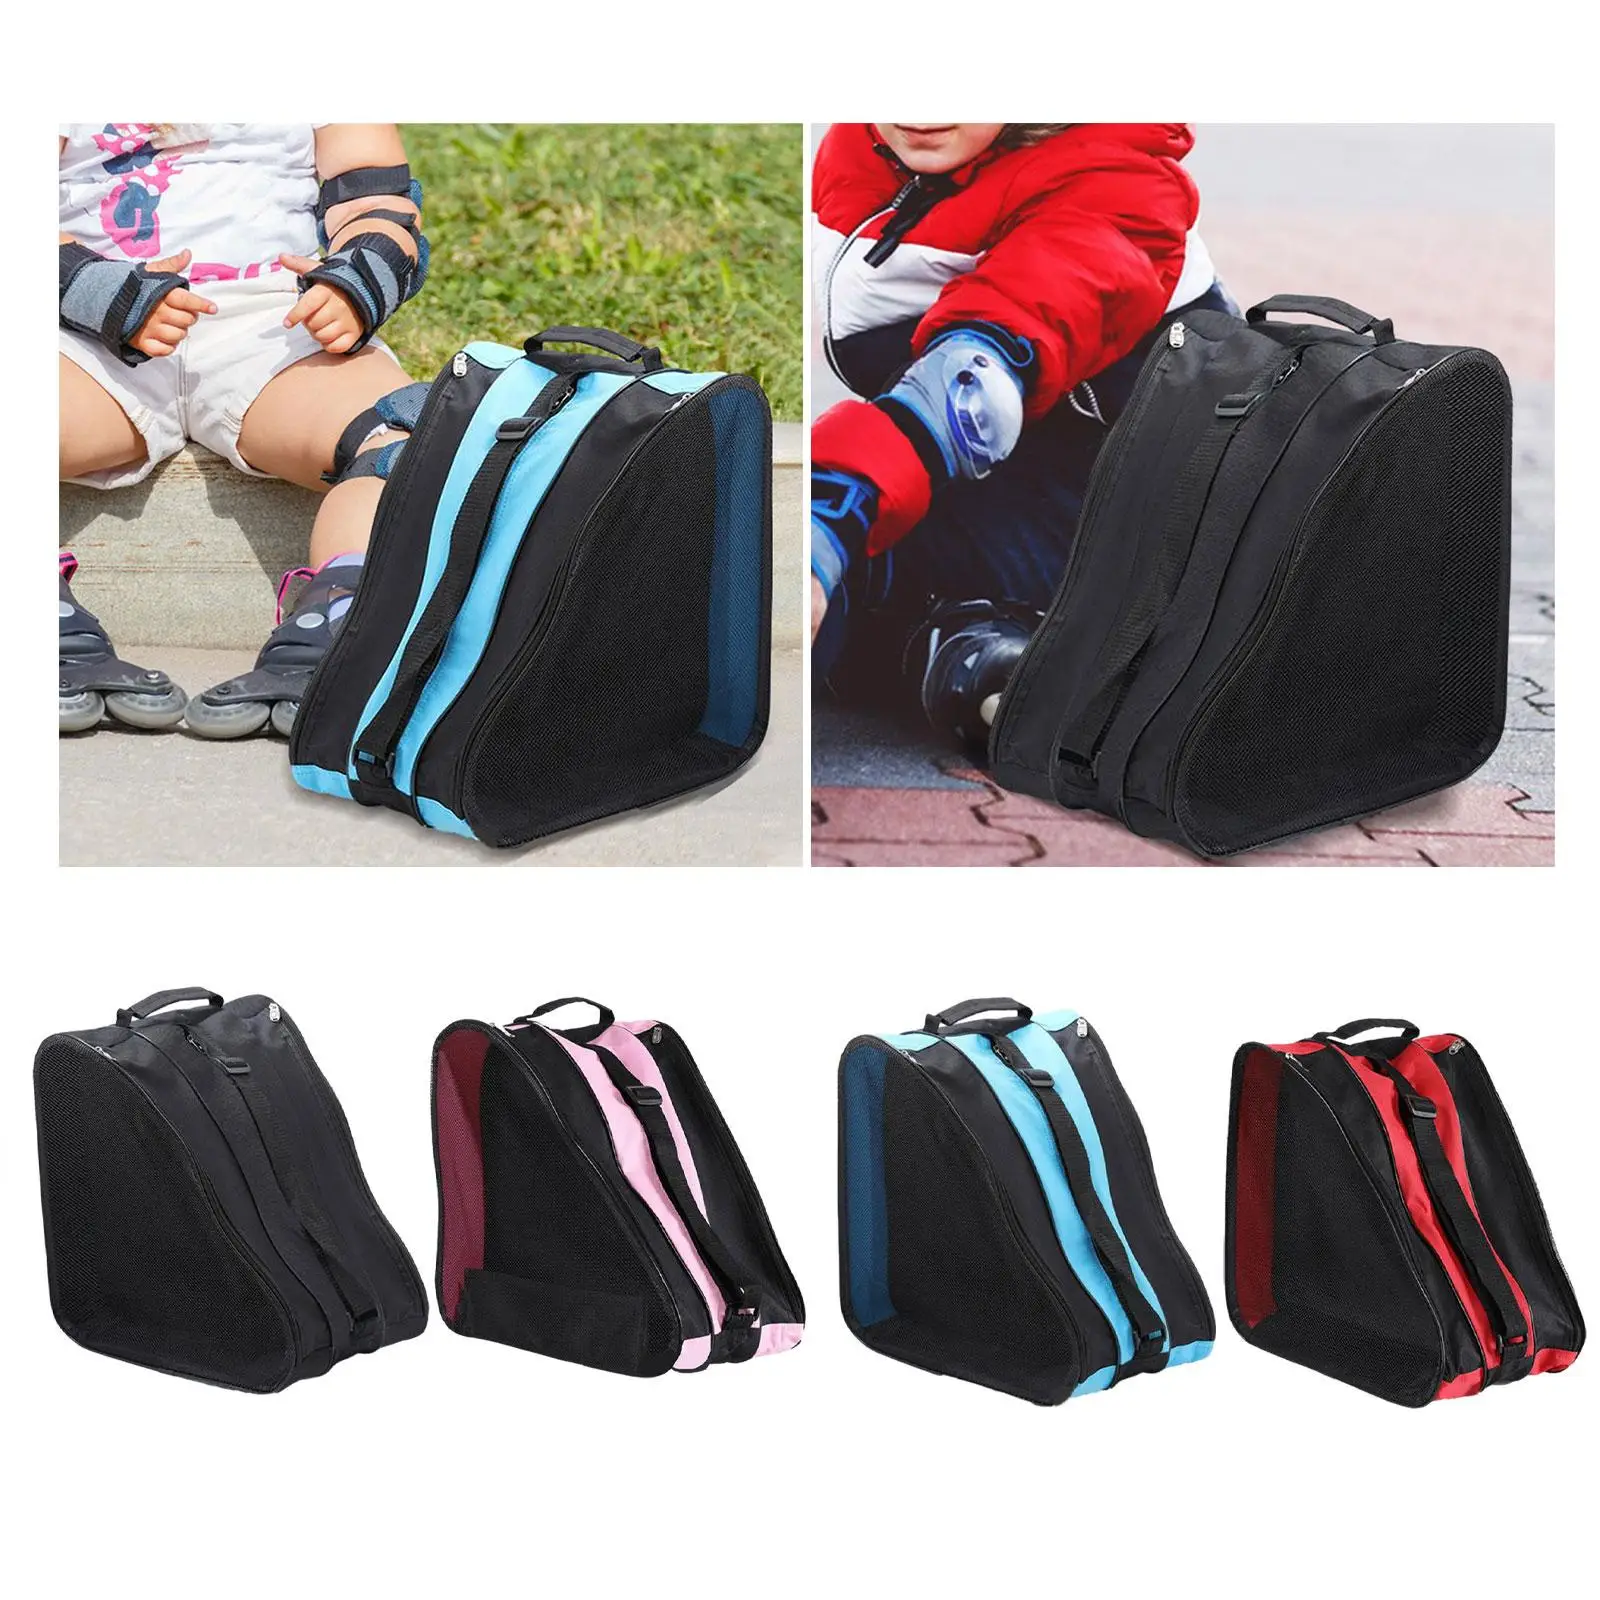 Roller Skate Bag Skate Carry Bag Fashion Durable Skiing Bags Organizer Skating Shoes Storage Bag Handbag for Ice Hockey Skate